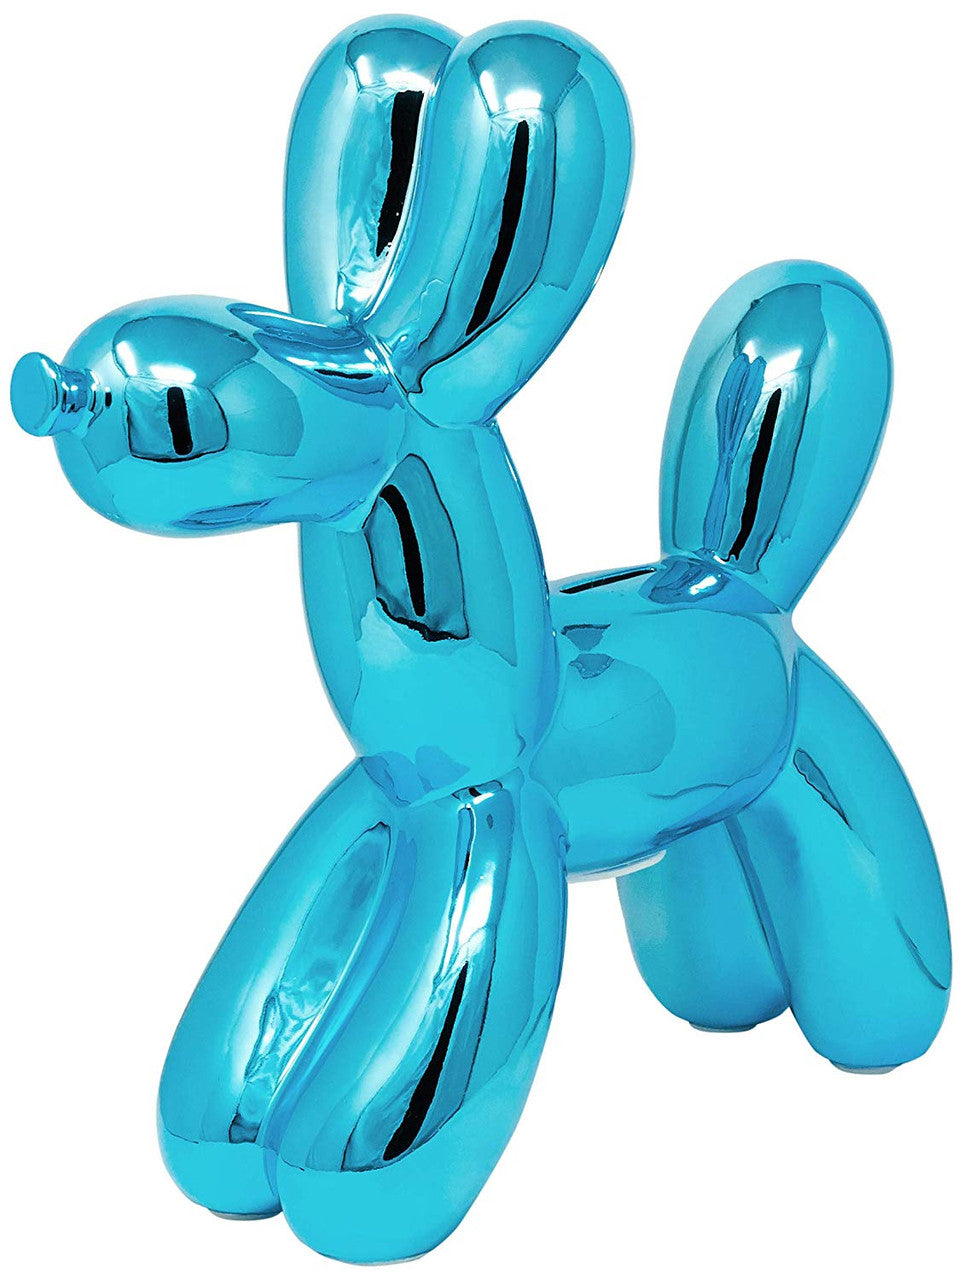 Blue Ceramic Balloon Dog Piggy Bank - 12" tall